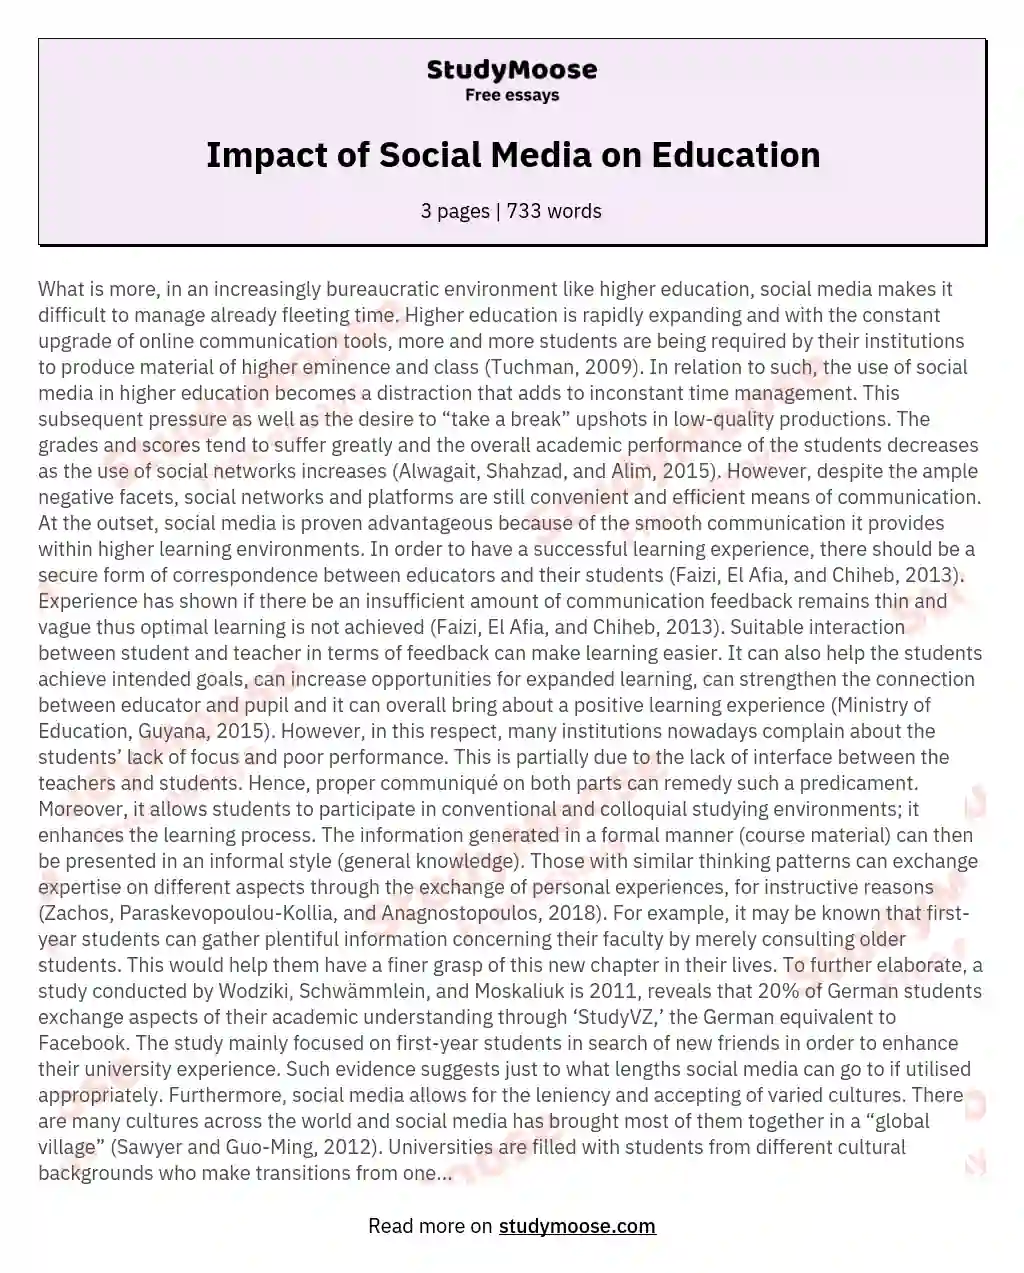 Impact of Social Media on Education essay